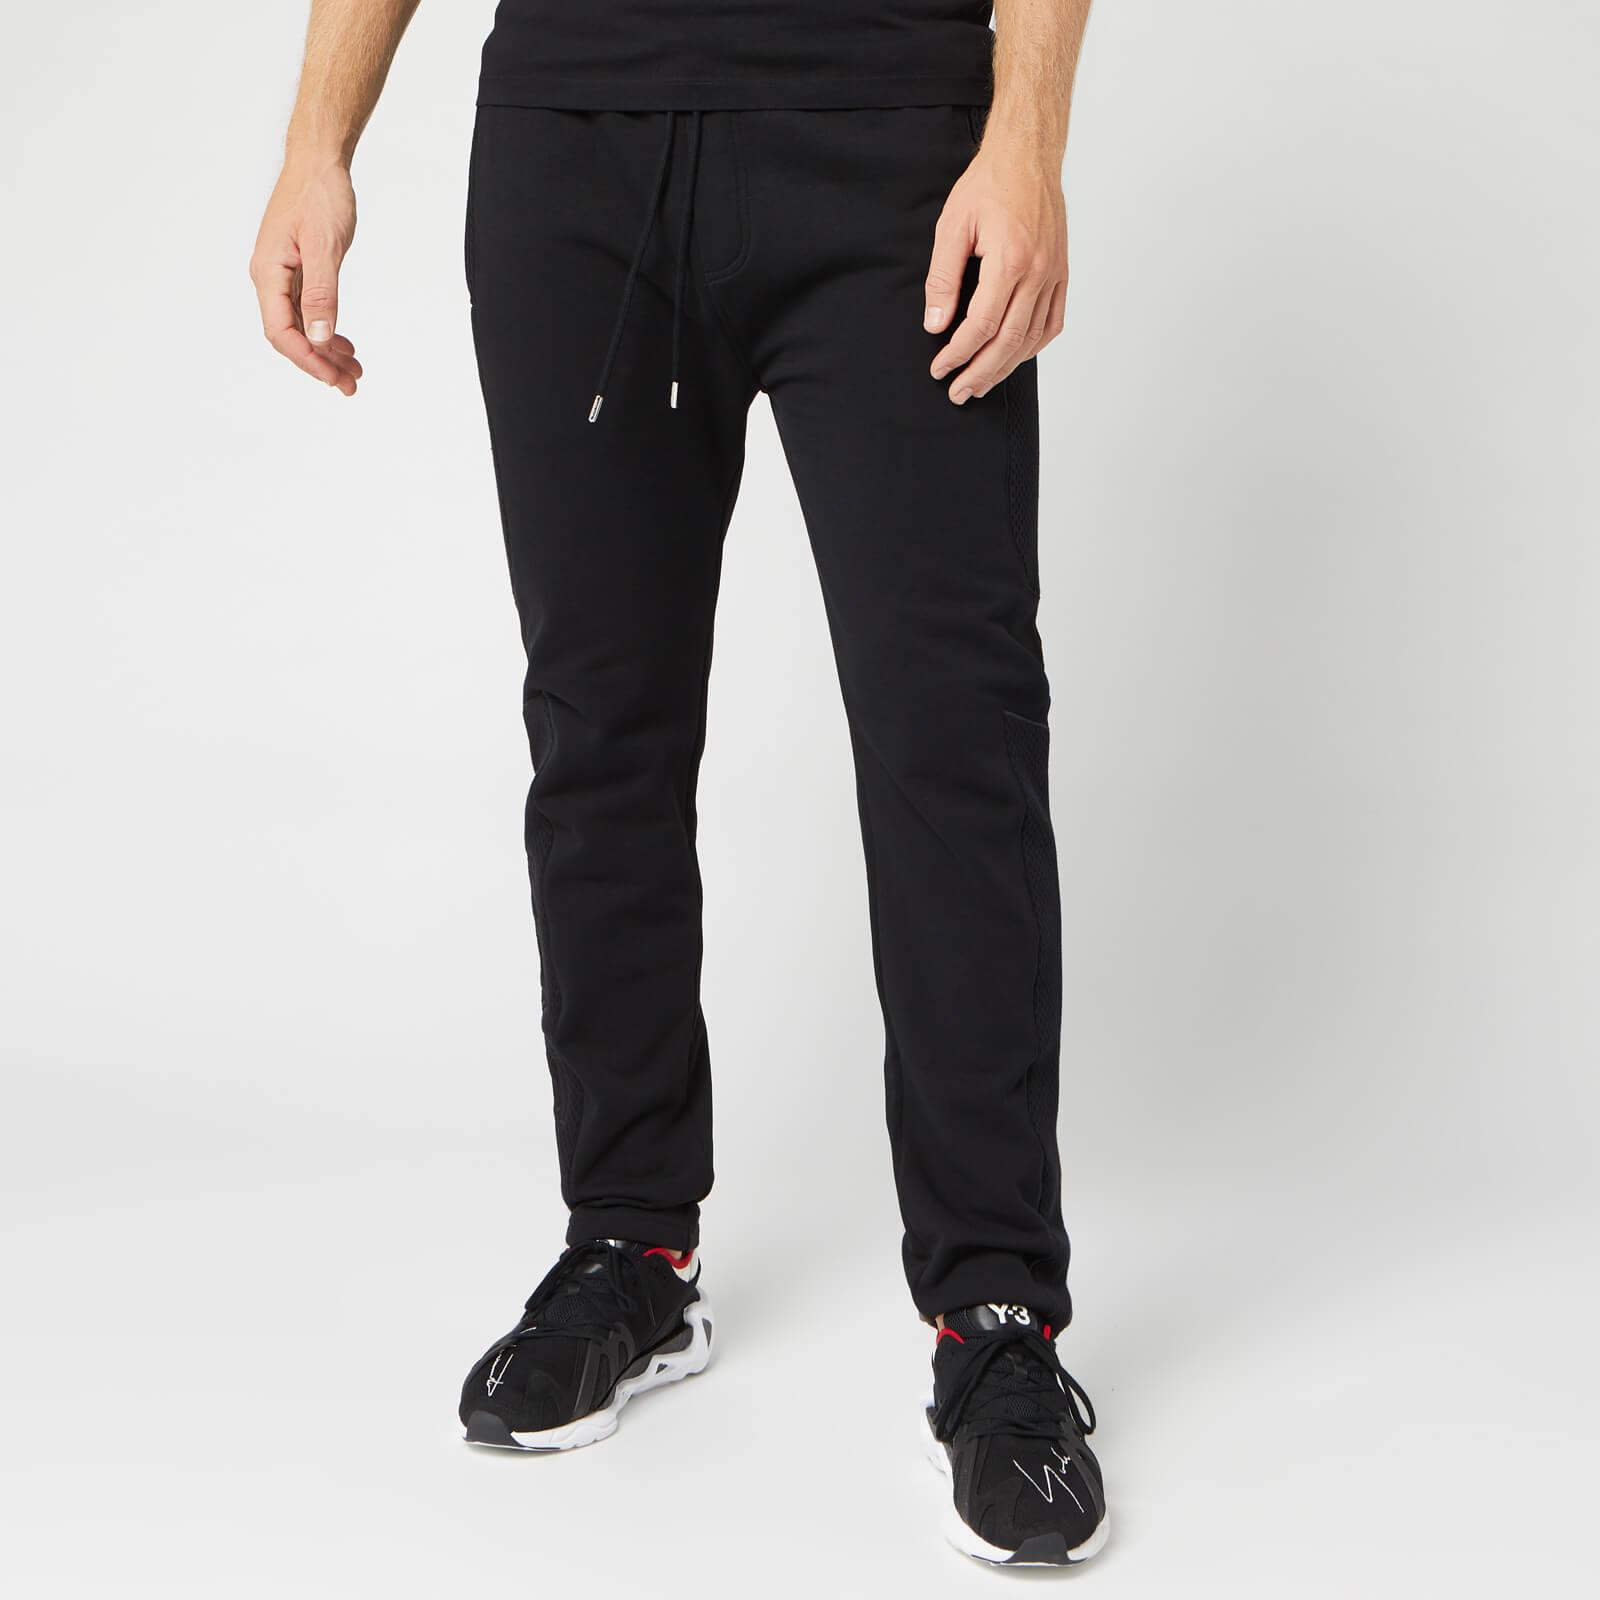 KENZO Mixed Mesh Sweatpants in Black for Men - Lyst